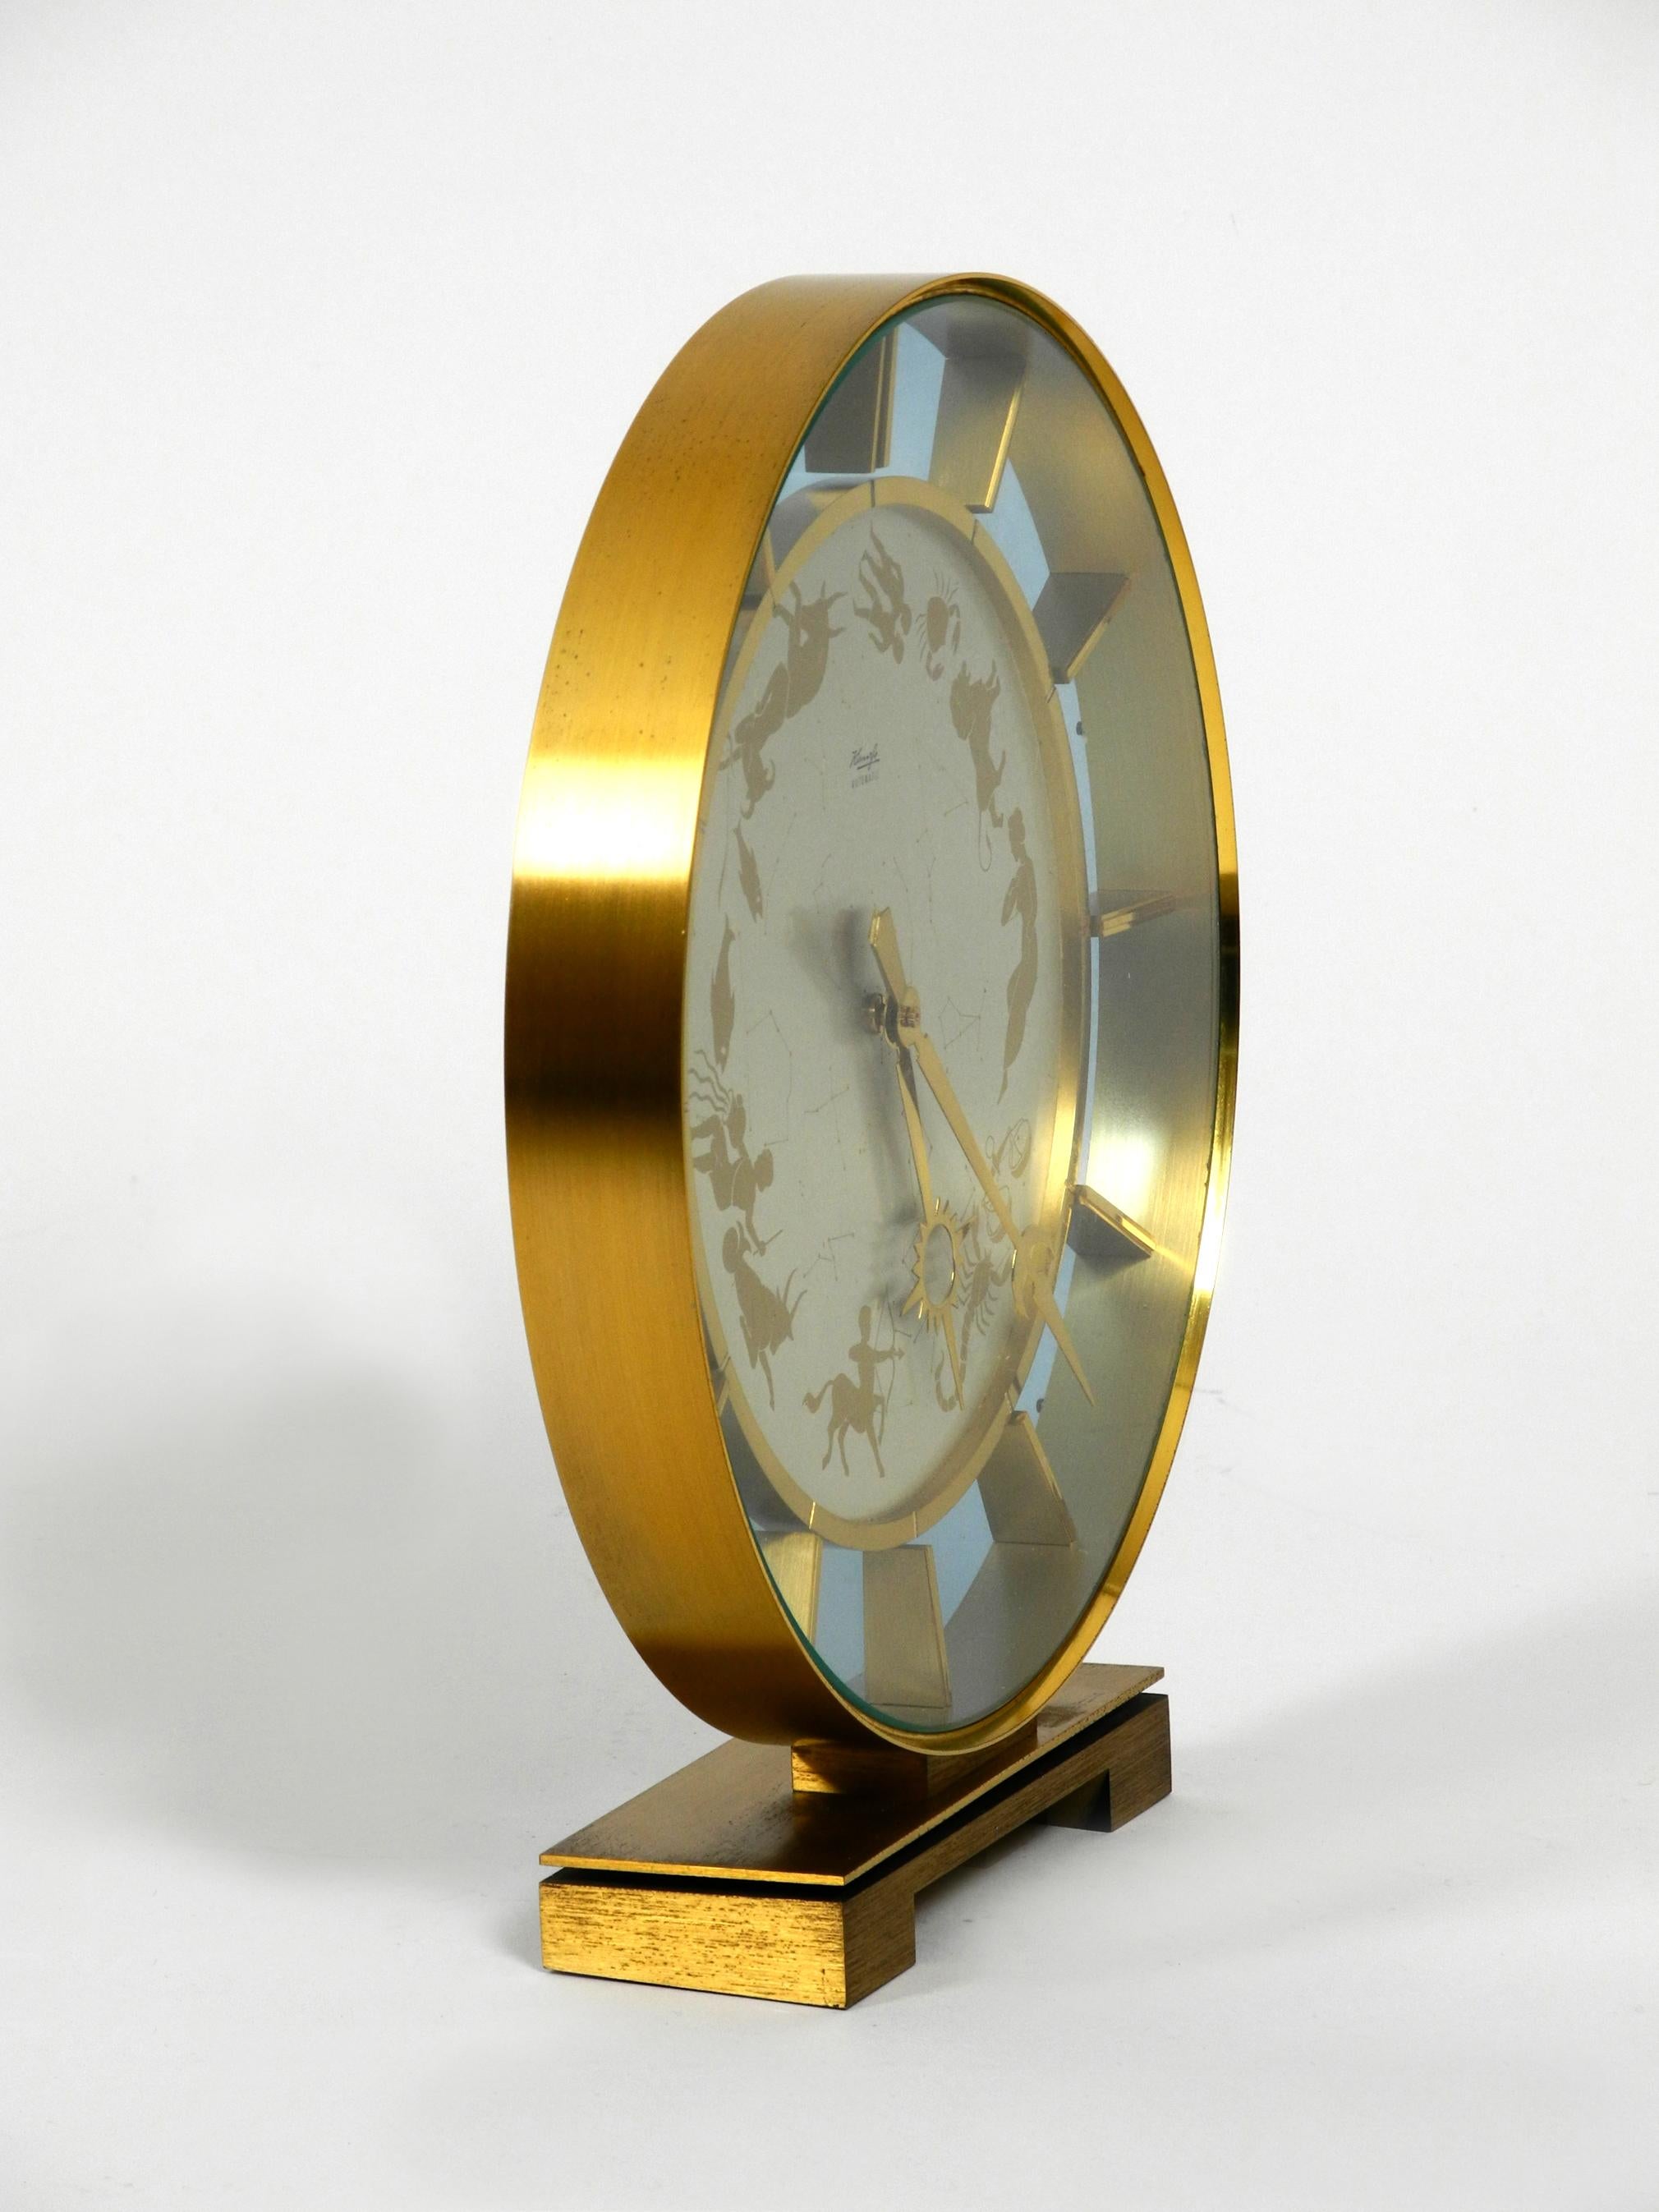 Space Age Rare Beautiful 1970s Big Kienzle Zodiac Table Clock Made of Heavy Brass